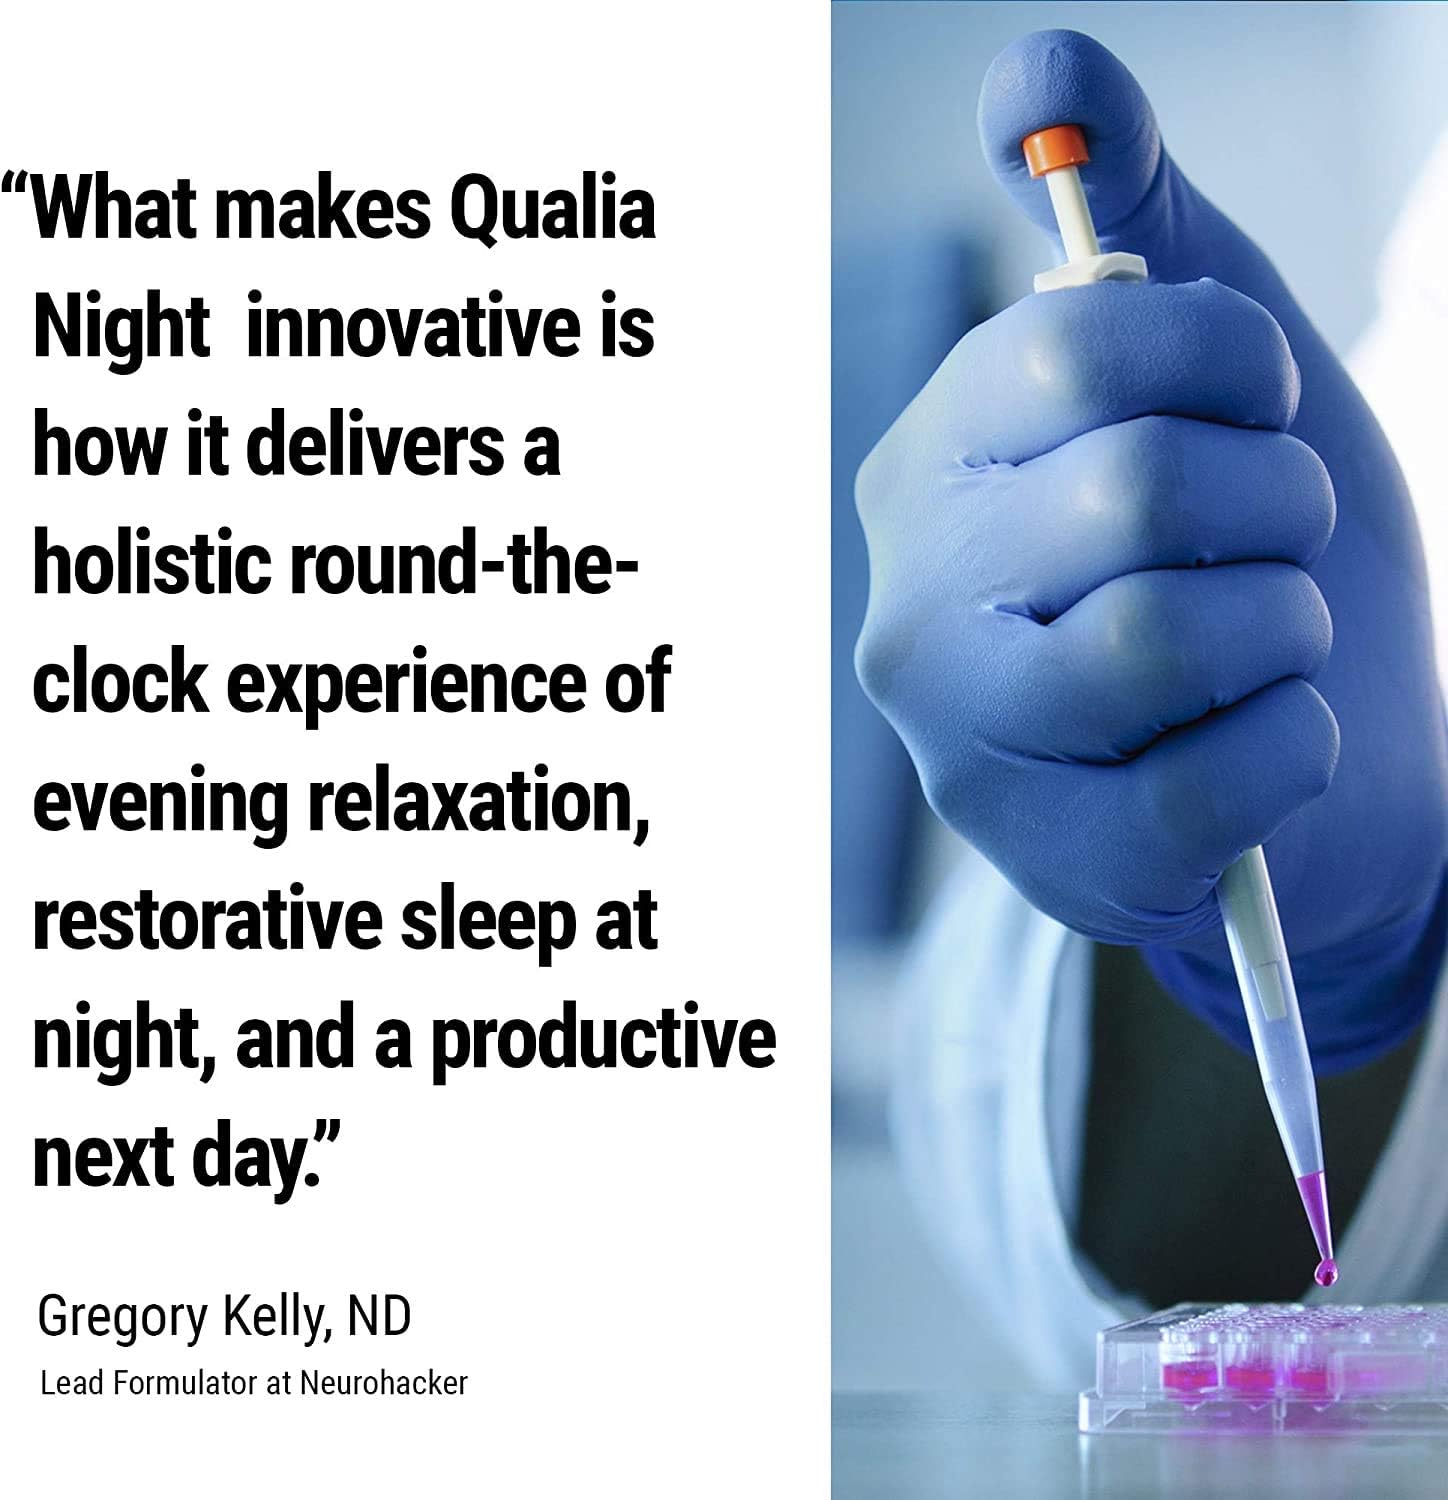 Qualia Night Sleep Aid | Non-Habit Forming | Science-Backed Supplement for Deep Refreshing Sleep | Melatonin-Free, Vegan, Non-Gmo, Gluten-Free